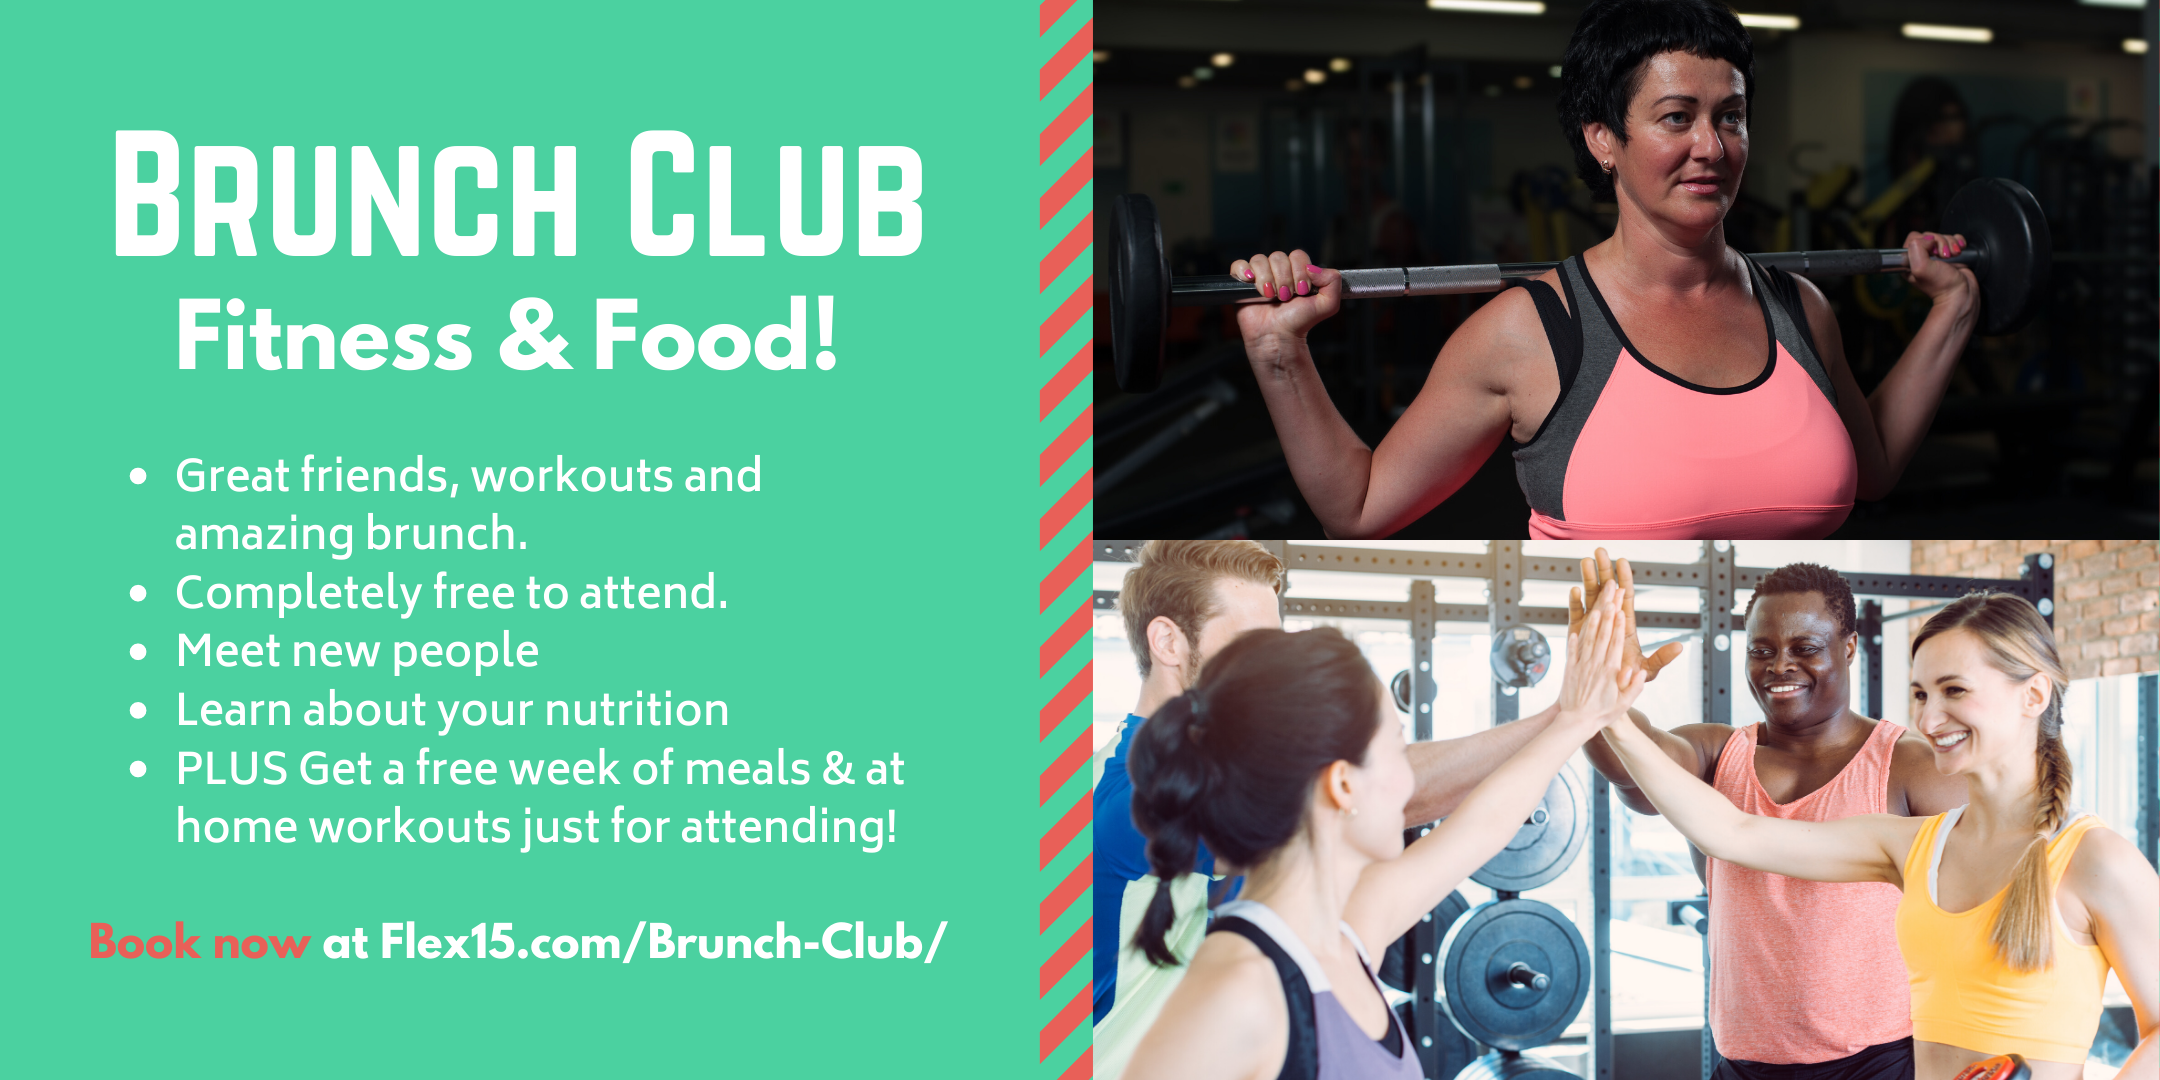 Brunch Club at Flex 15 Fitness & Nutrition - Fitness & Food!